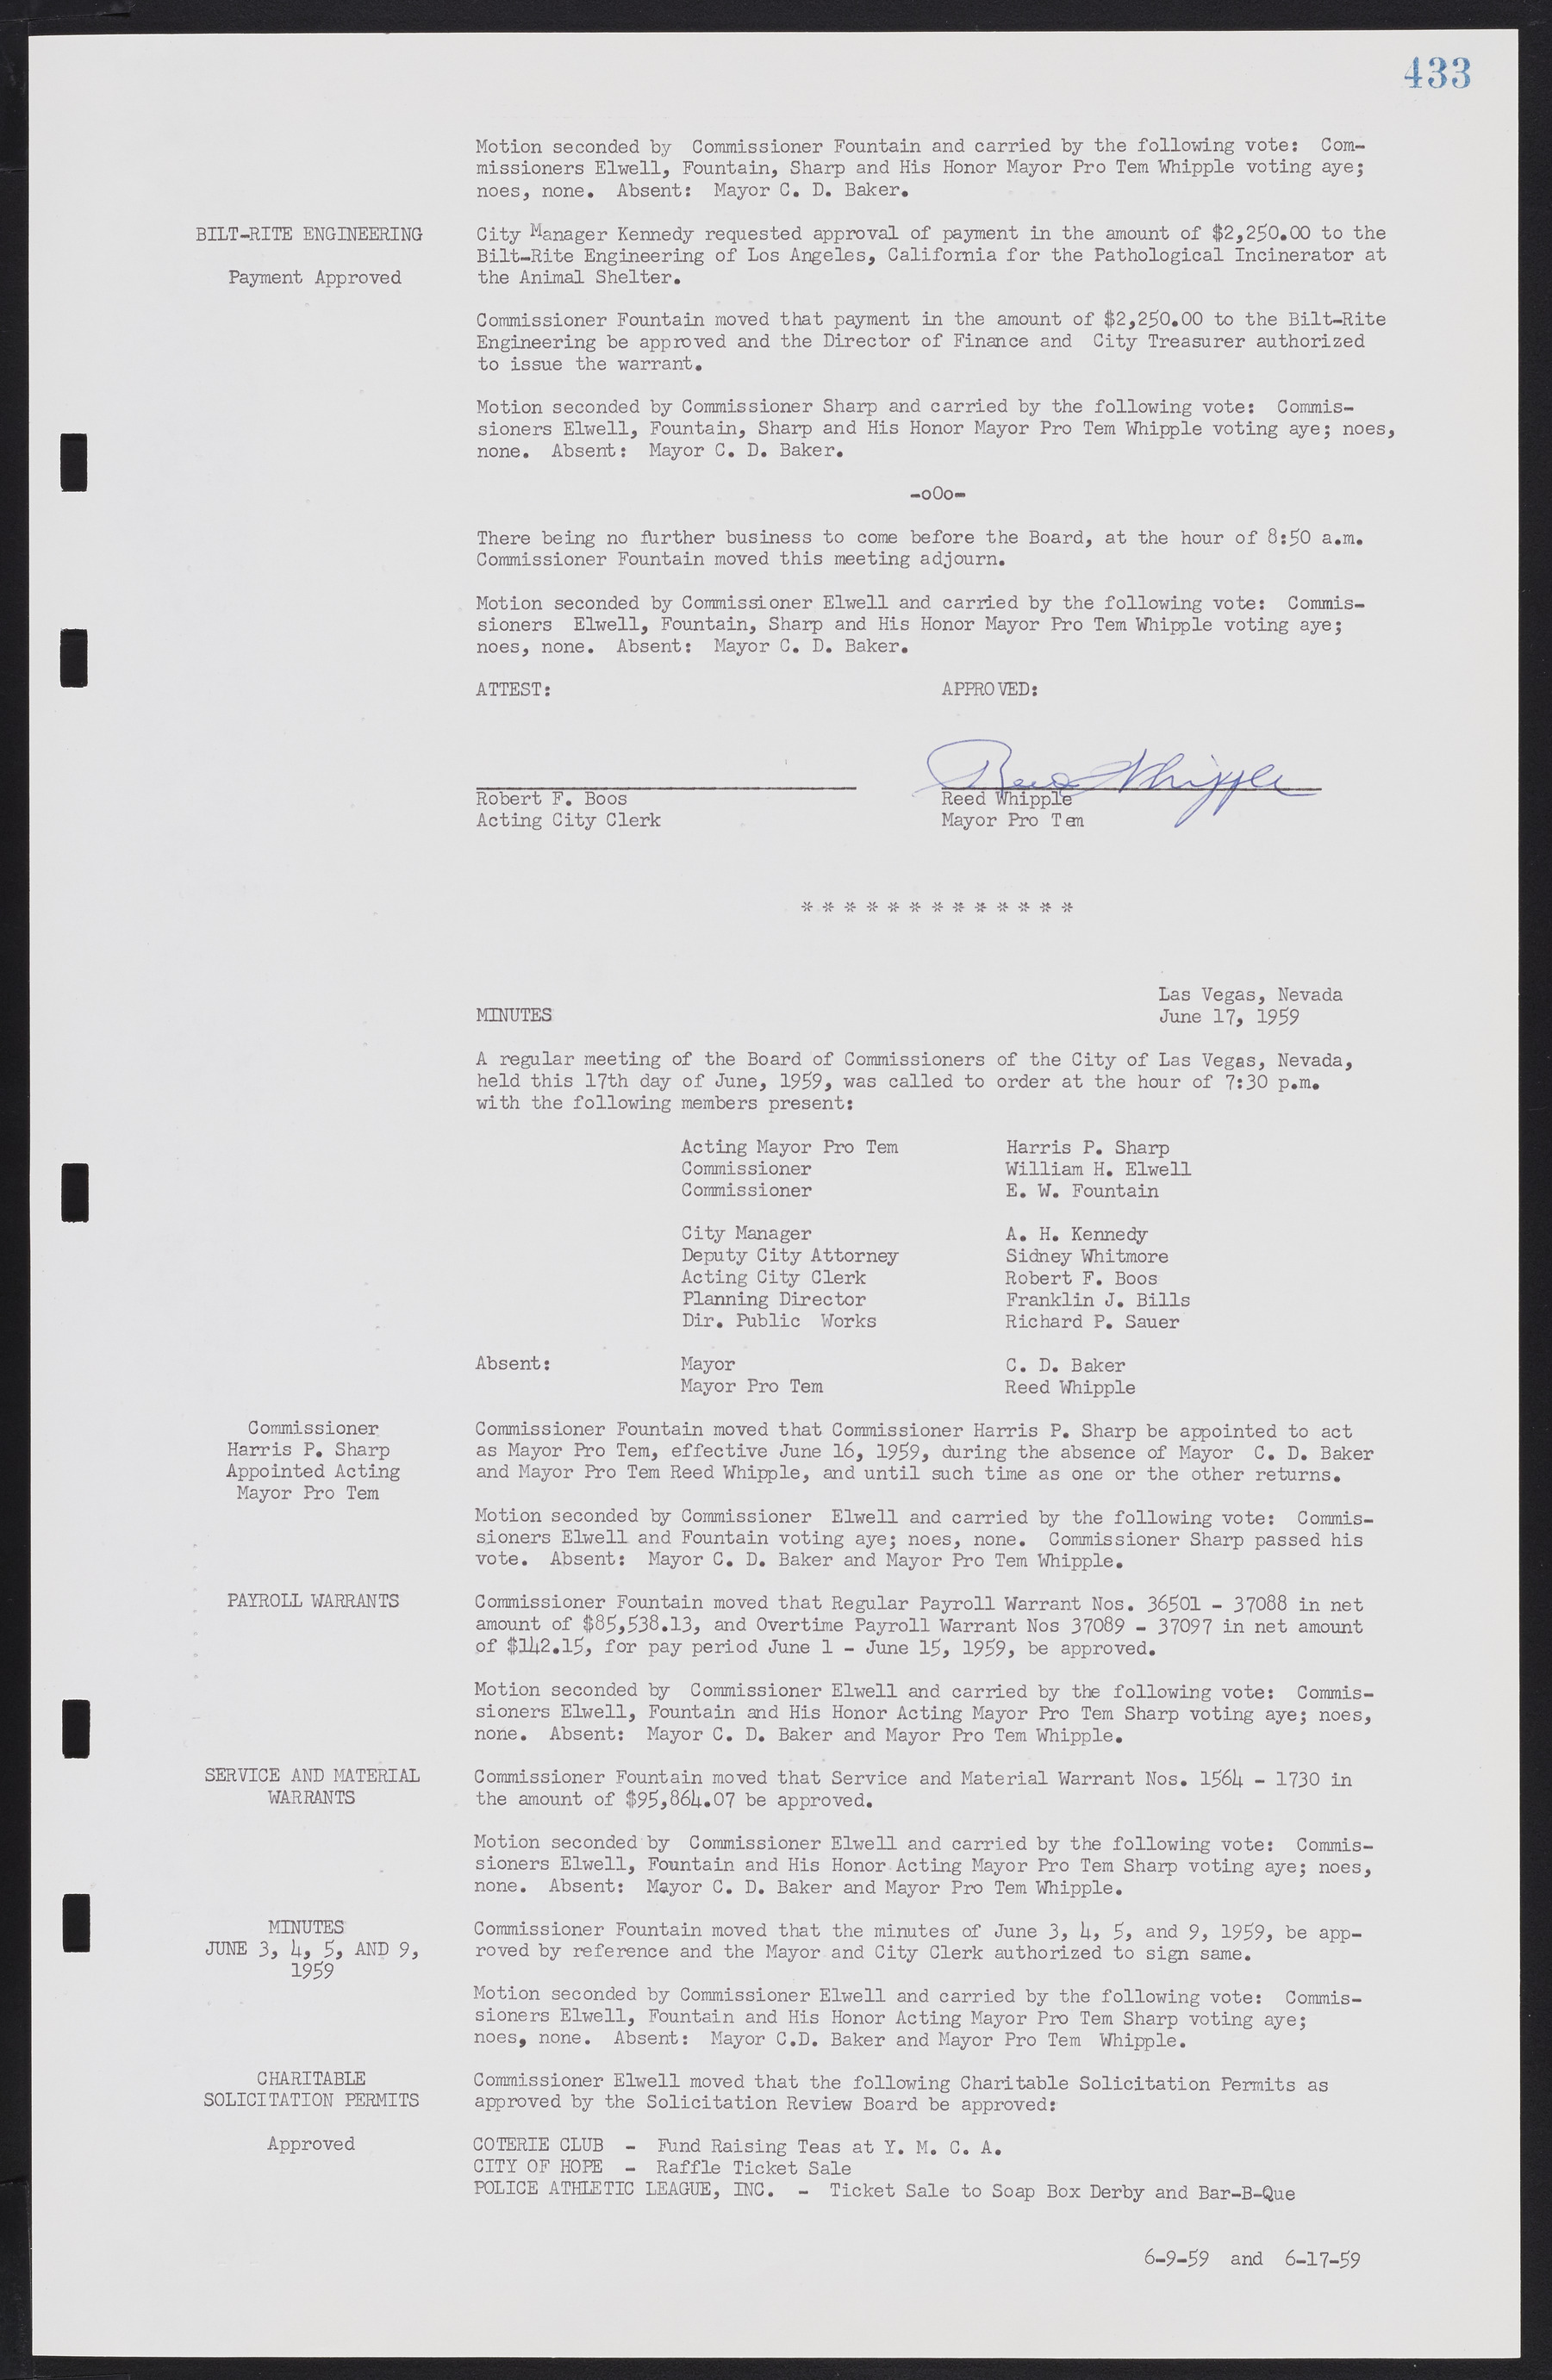 Las Vegas City Commission Minutes, November 20, 1957 to December 2, 1959, lvc000011-469